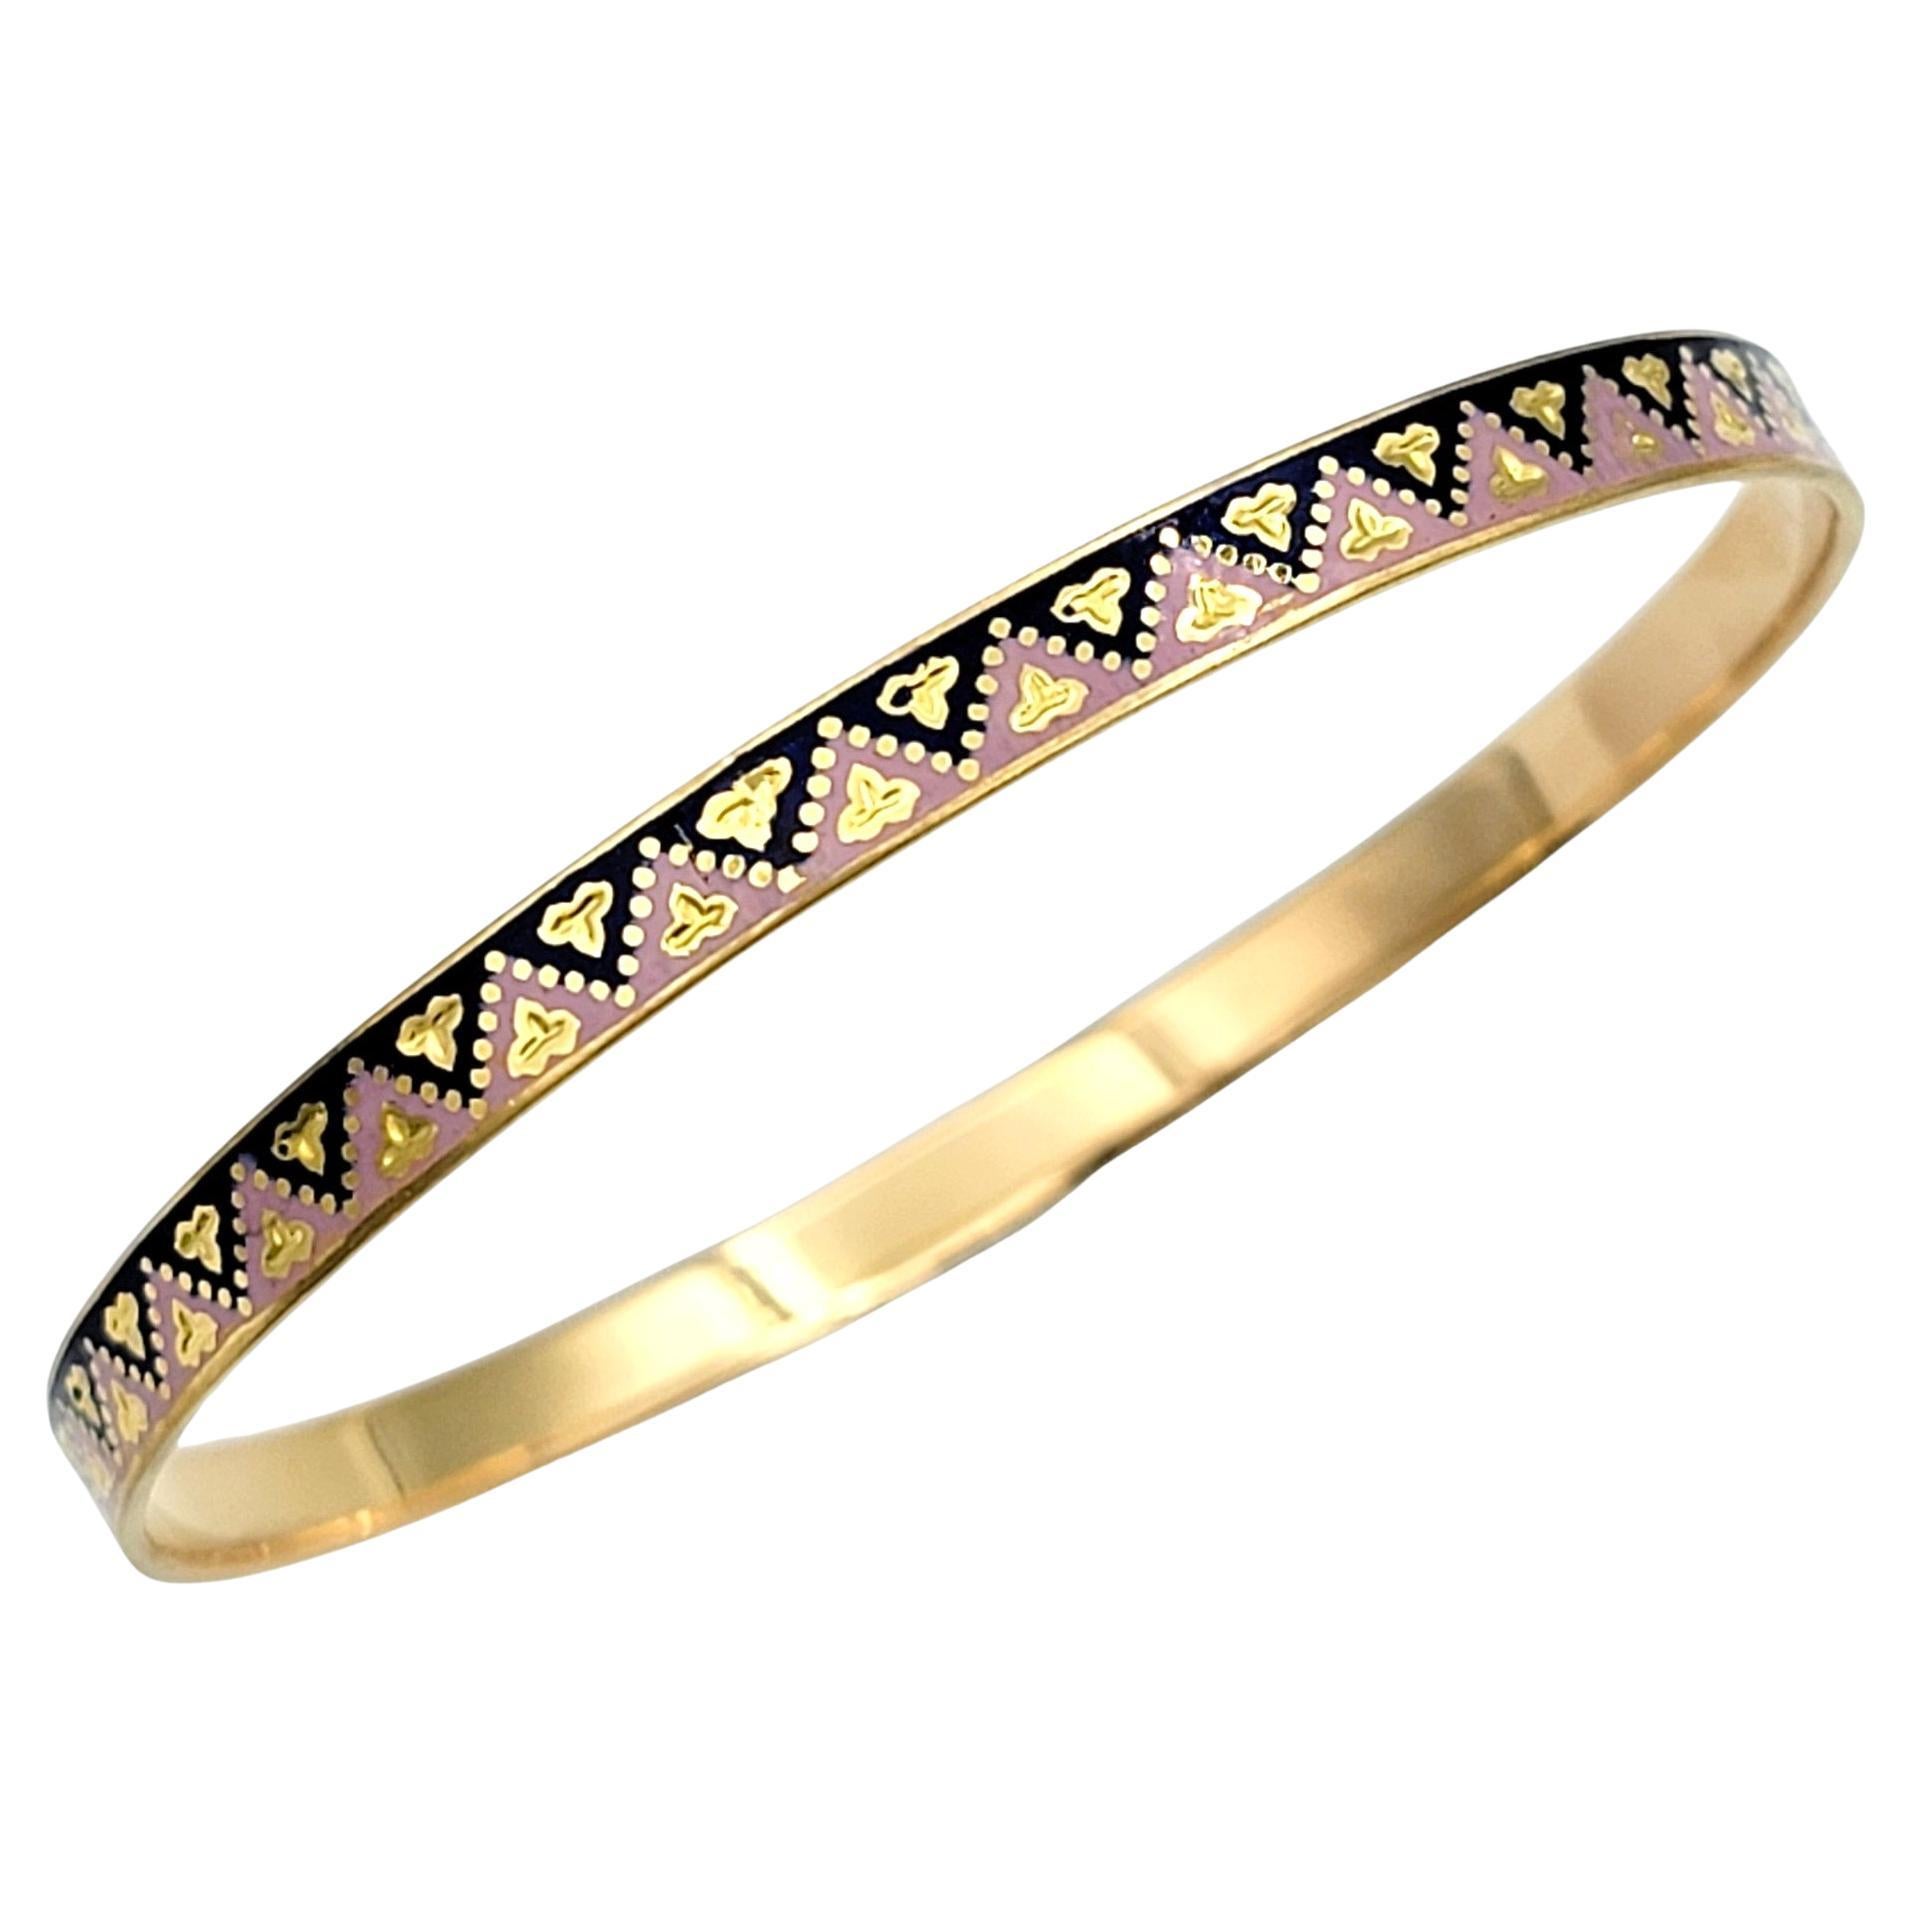 Light Pink and Dark Blue Enamel Design Bangle Bracelet in 22 Karat Yellow Gold